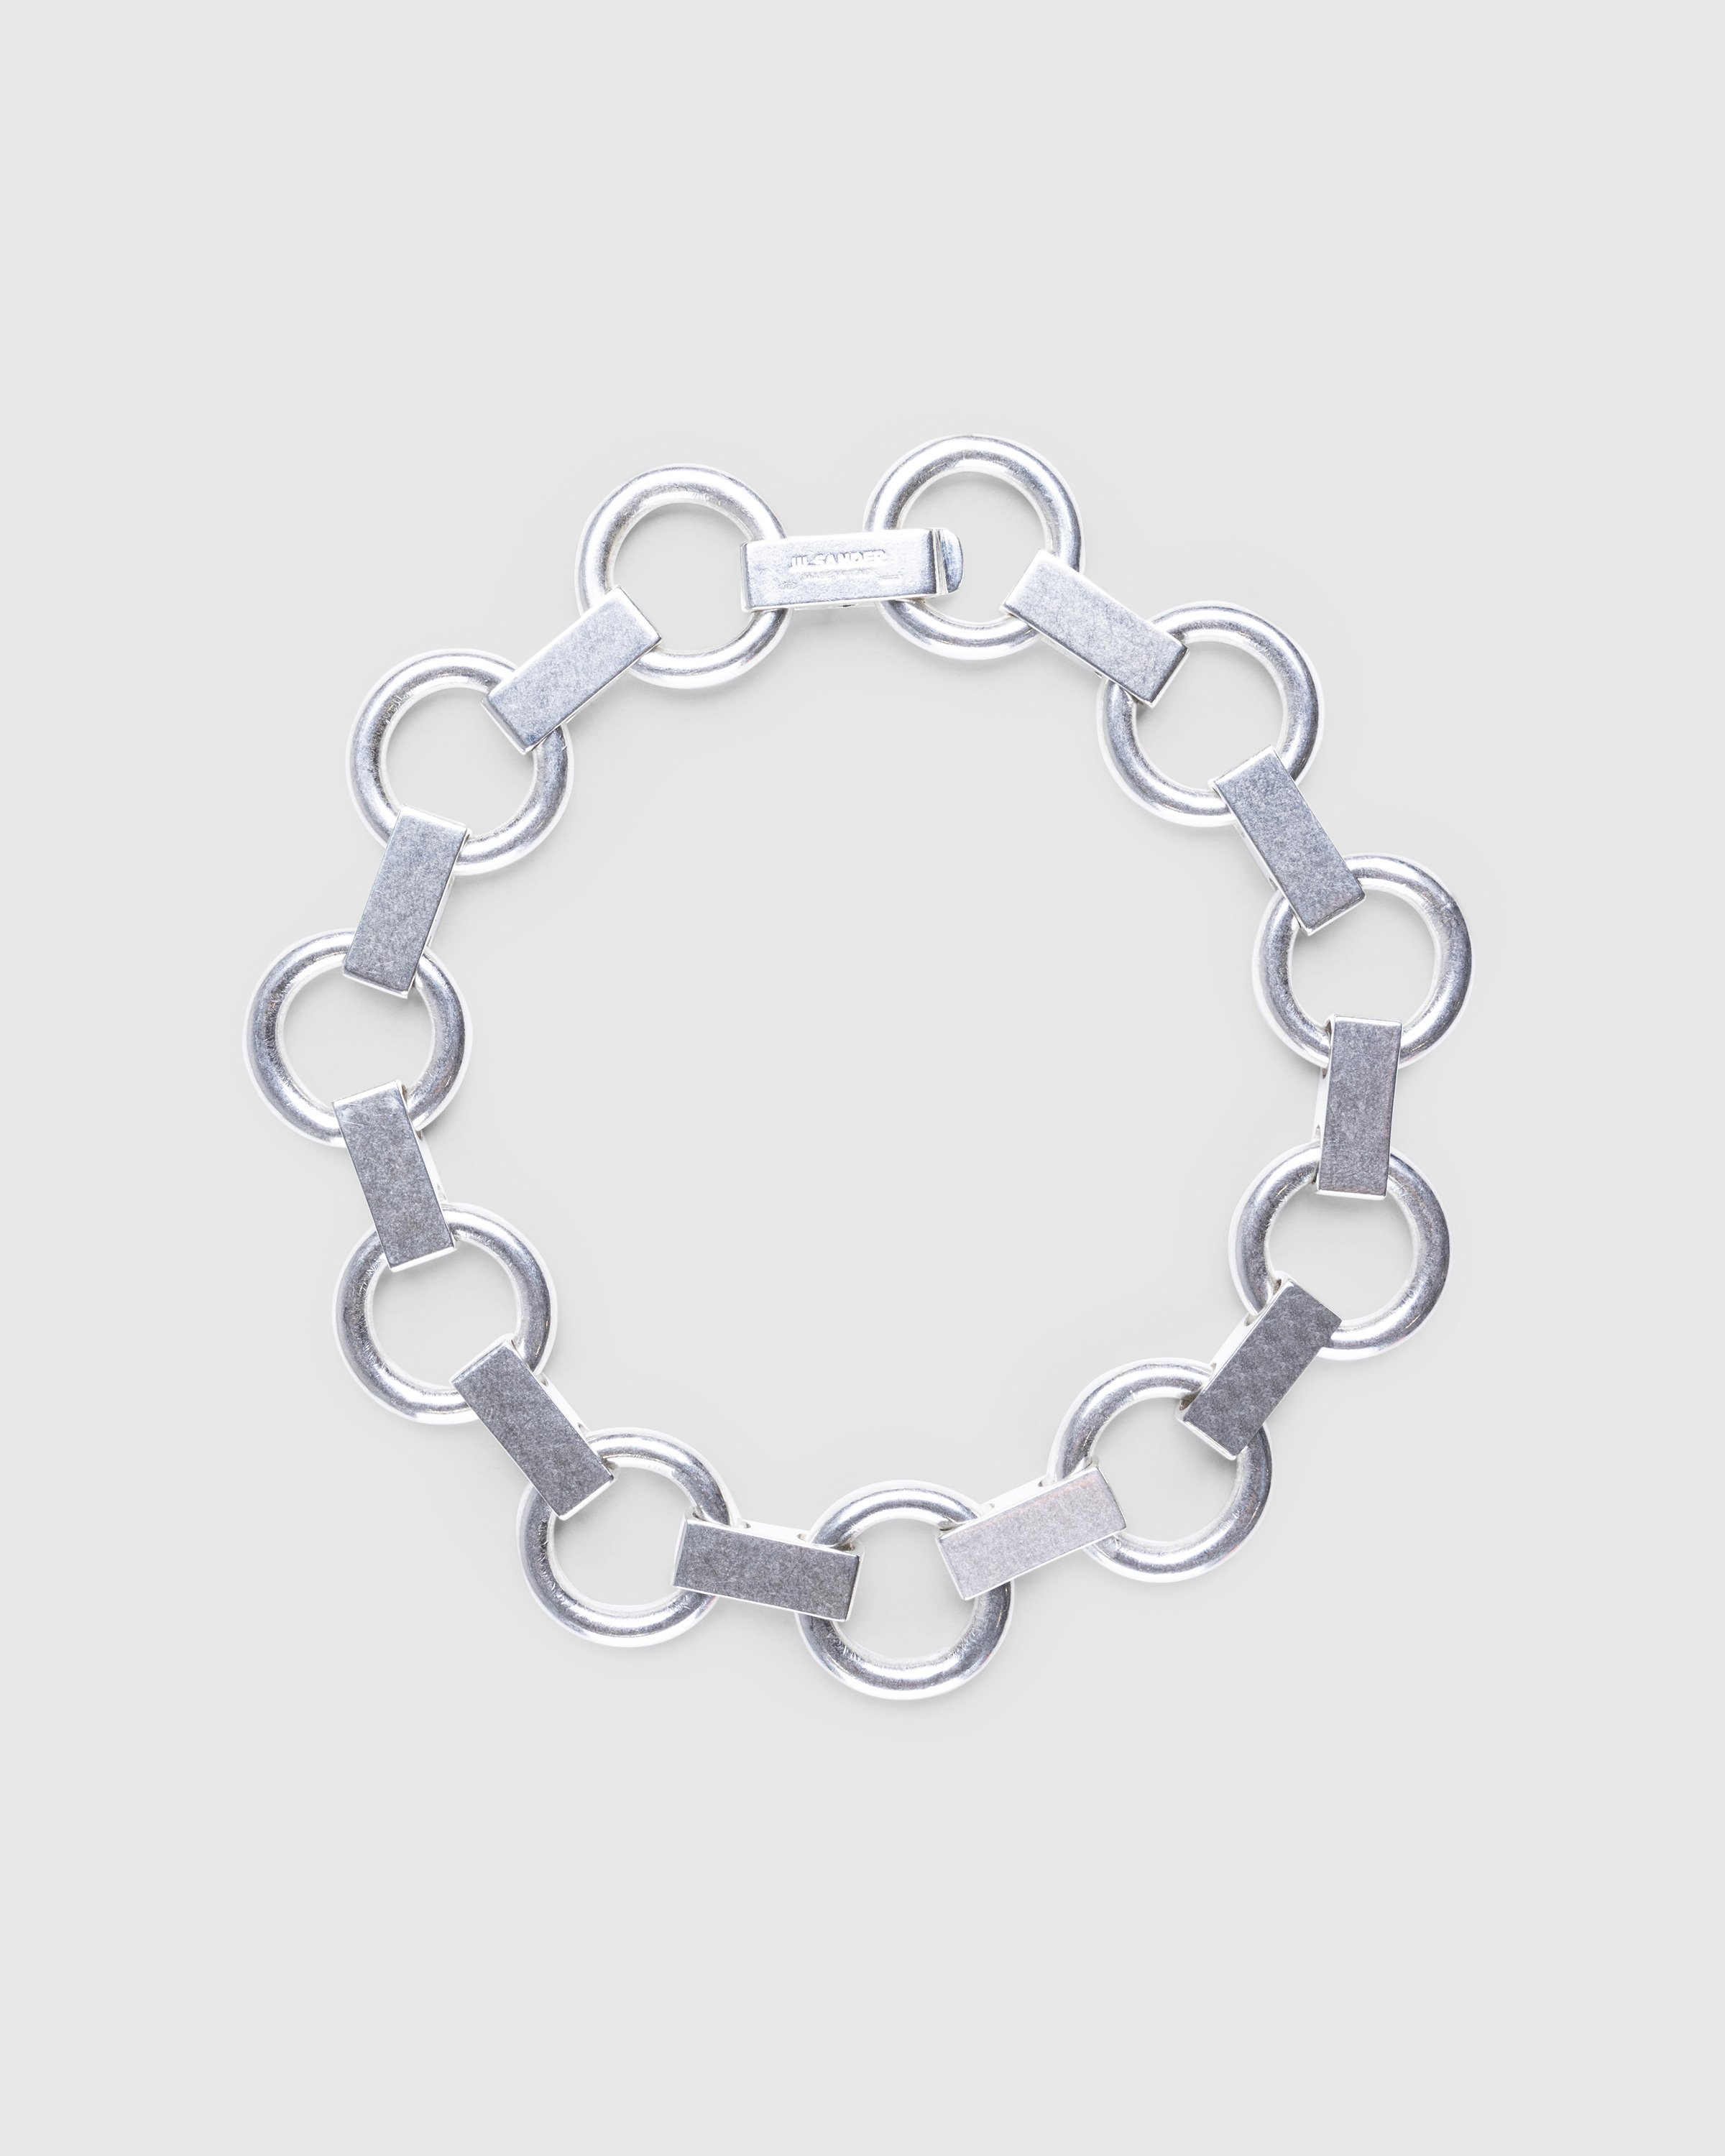 Jil Sander - Our New Chain Bracelet 1 - Accessories - Silver - Image 1